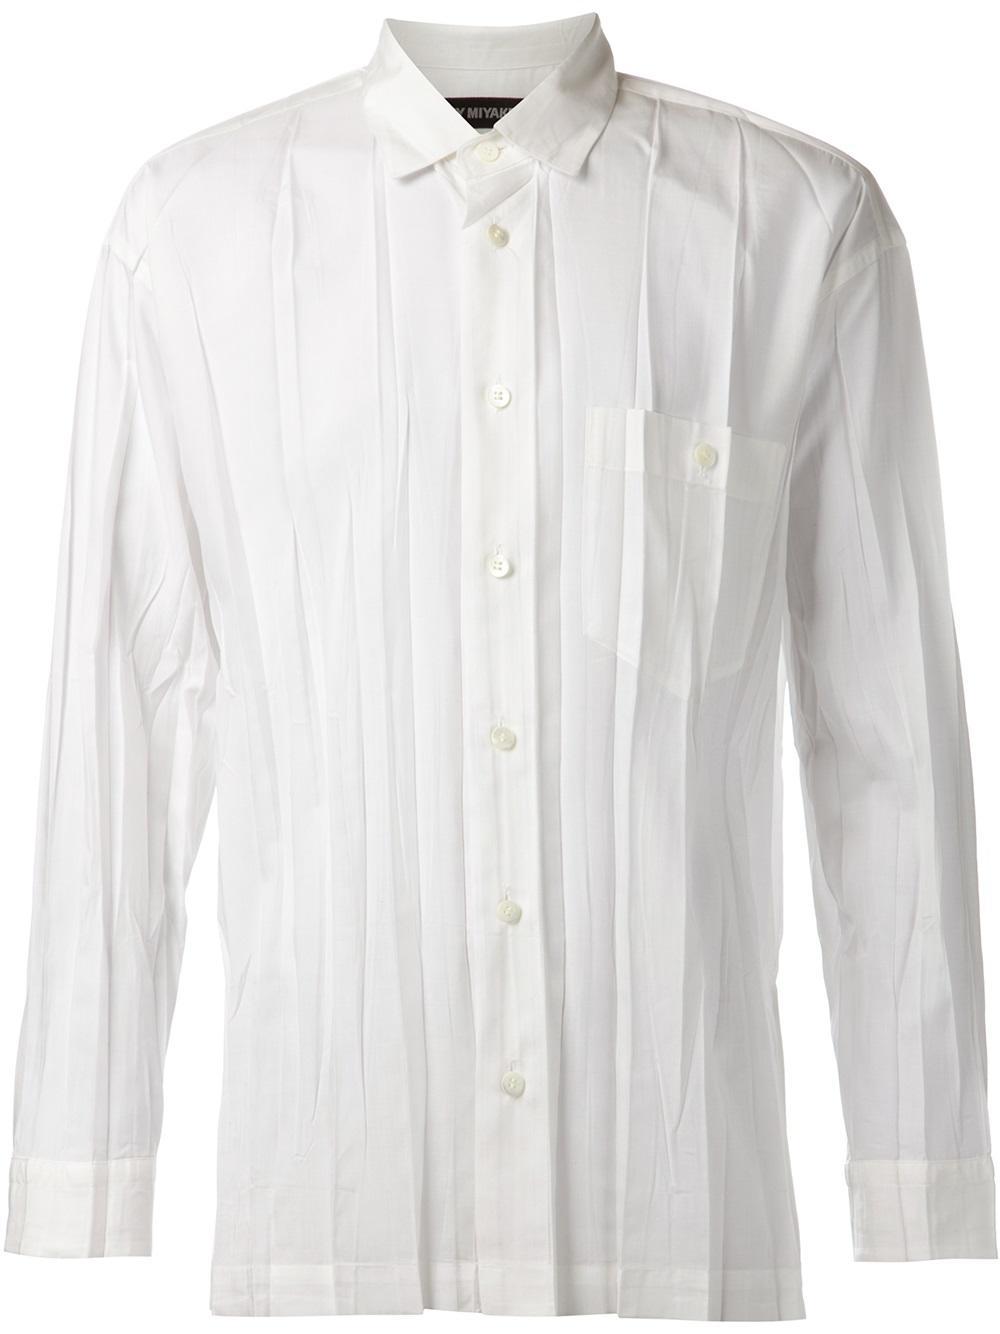 Lyst - Issey Miyake Wrinkle Shirt in White for Men